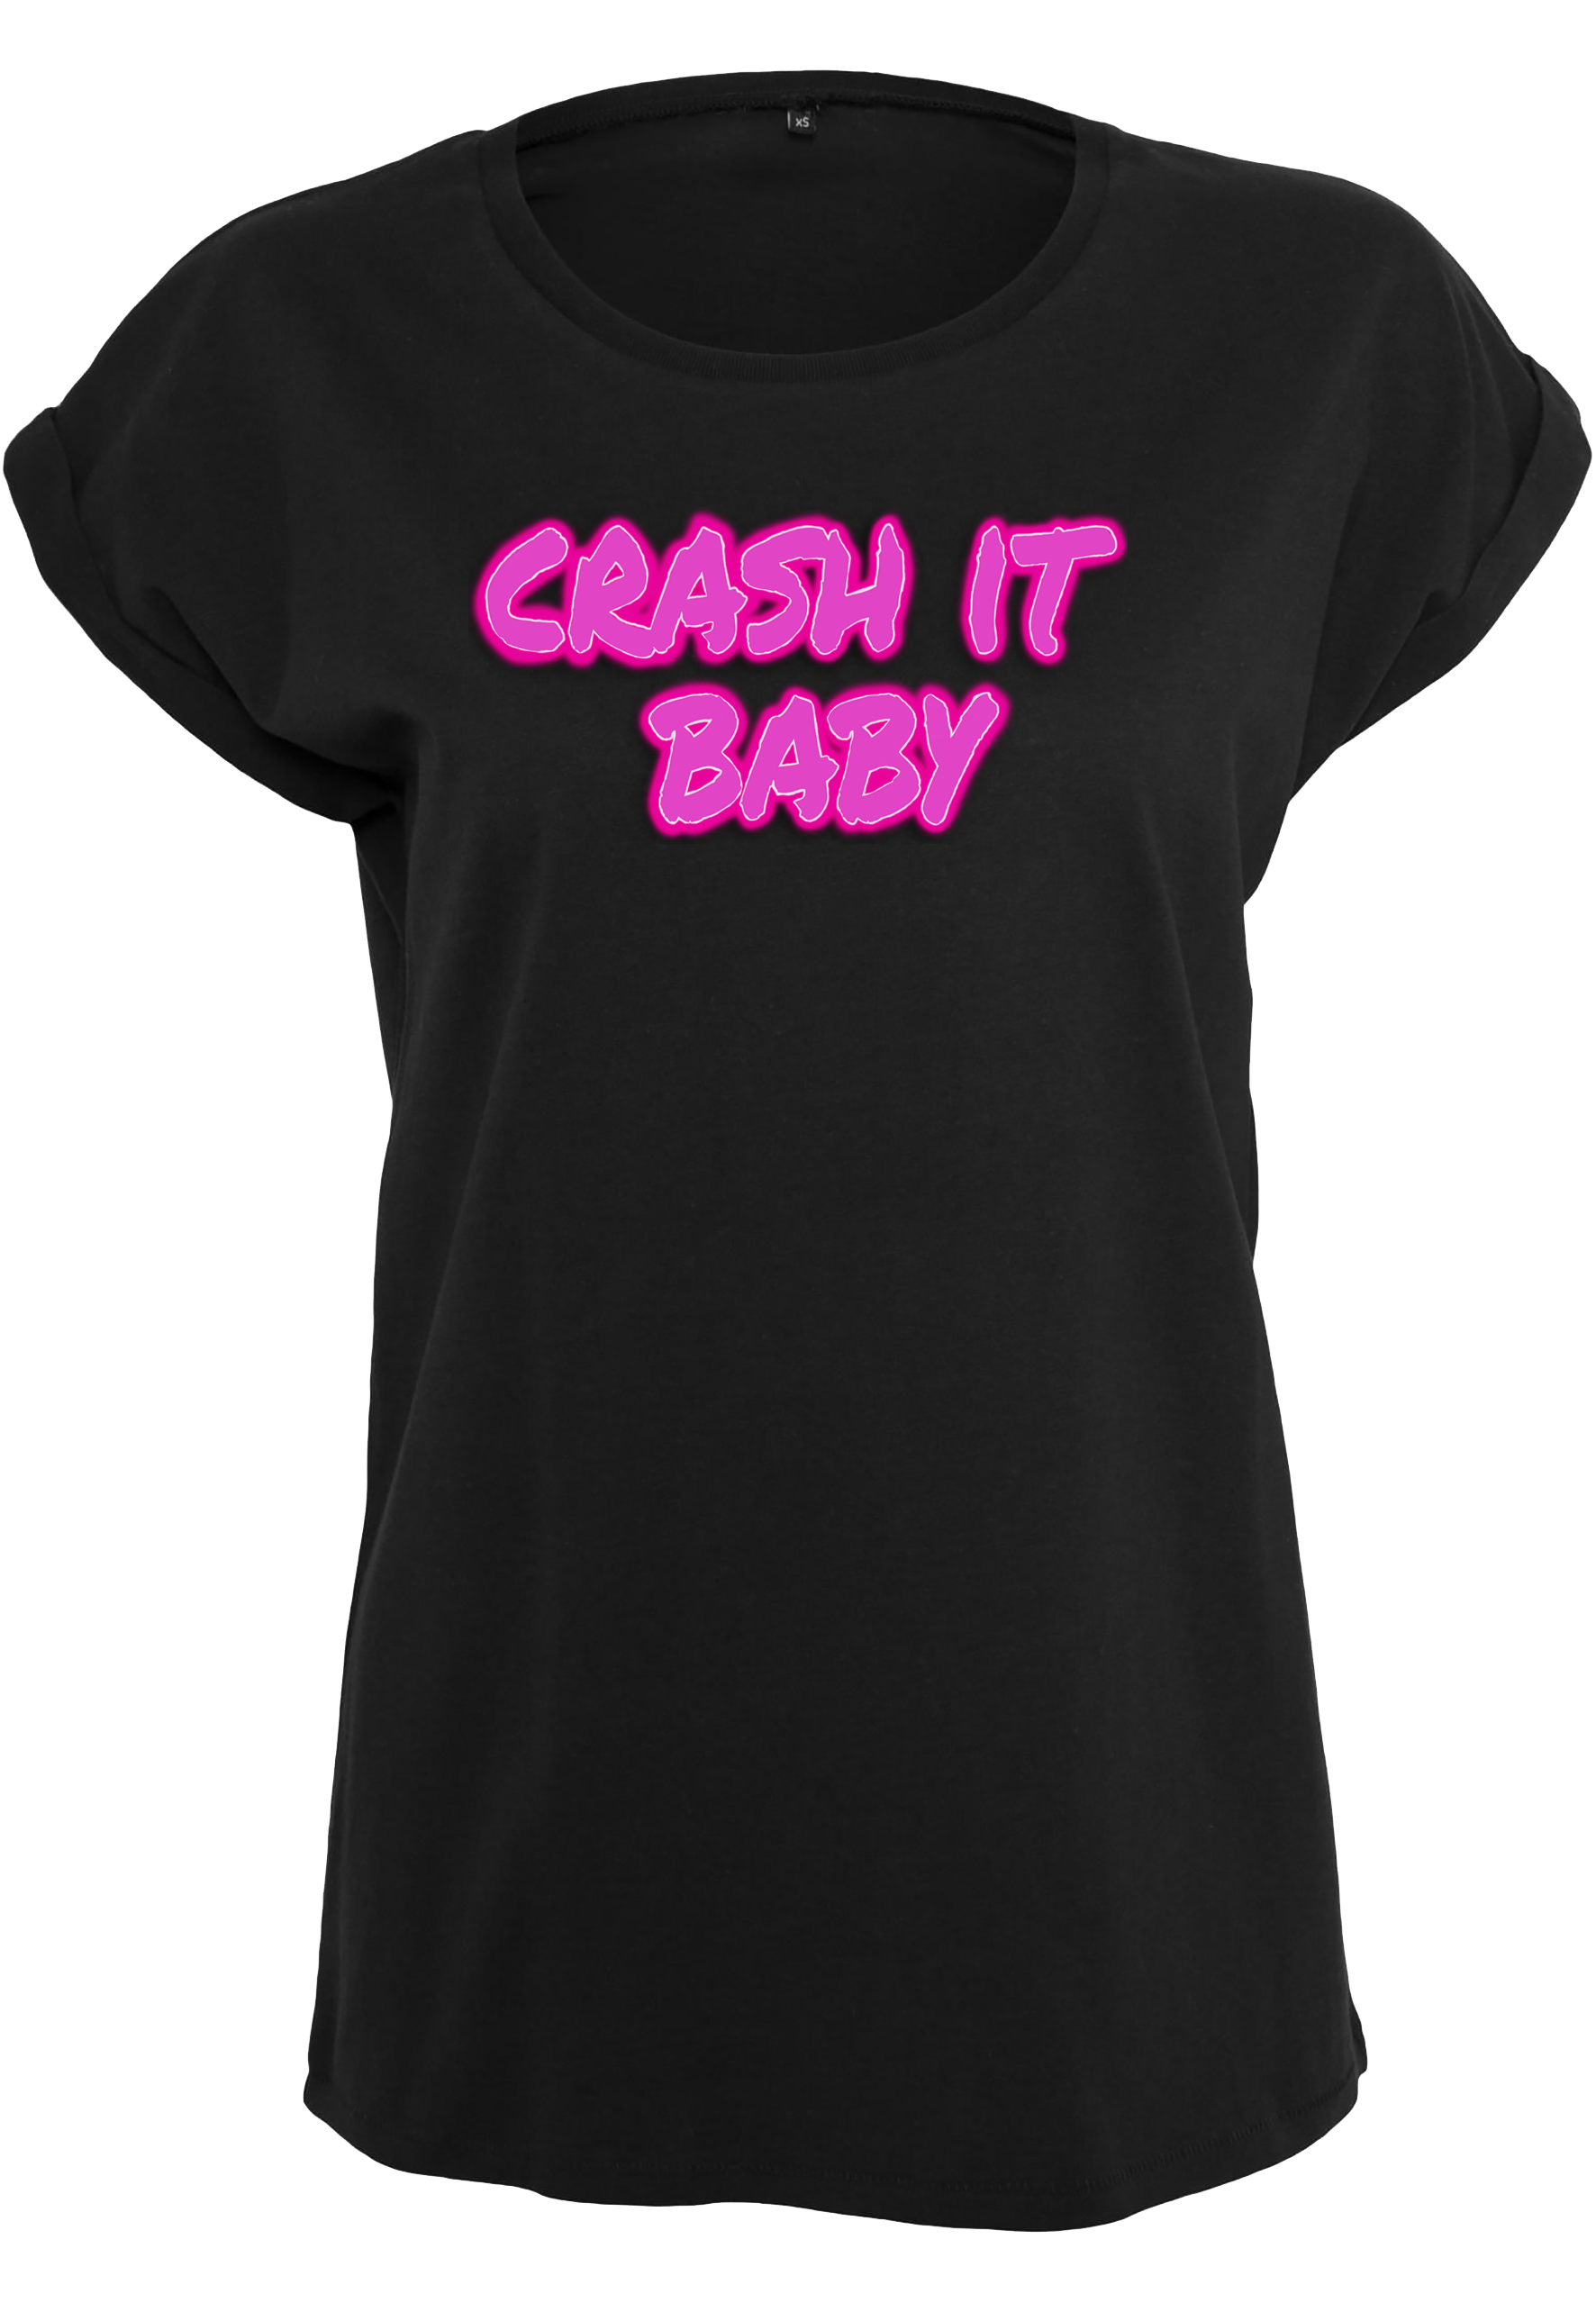 Partycrasher - Crash it Baby Girl Extended Shirt [schwarz] 